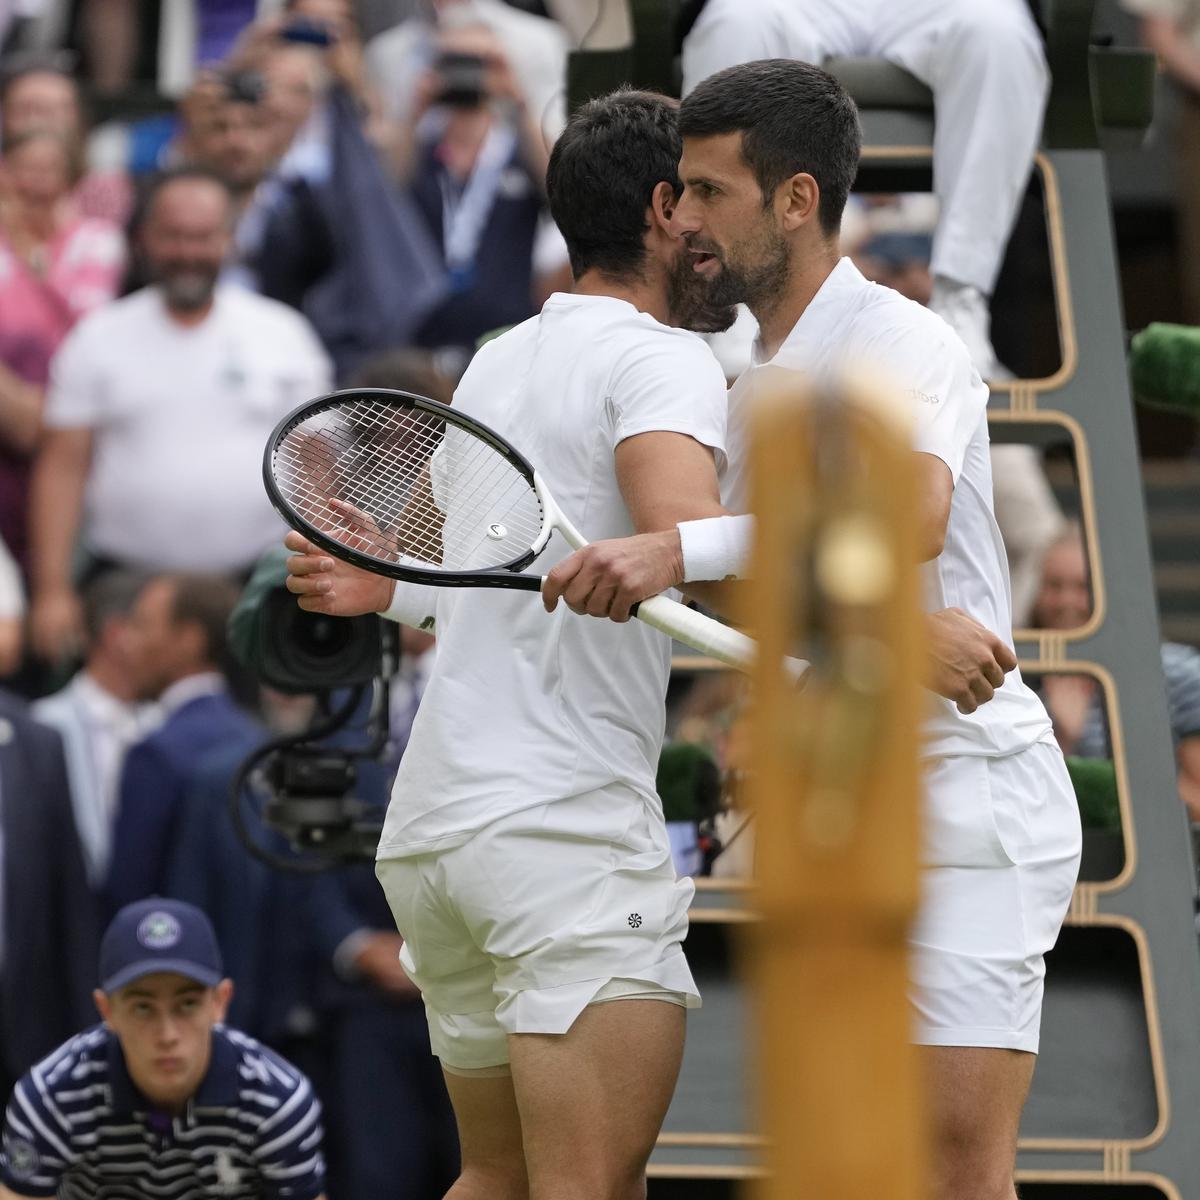 Wimbledon: Carlos Alcaraz won't fret about sounding humble at